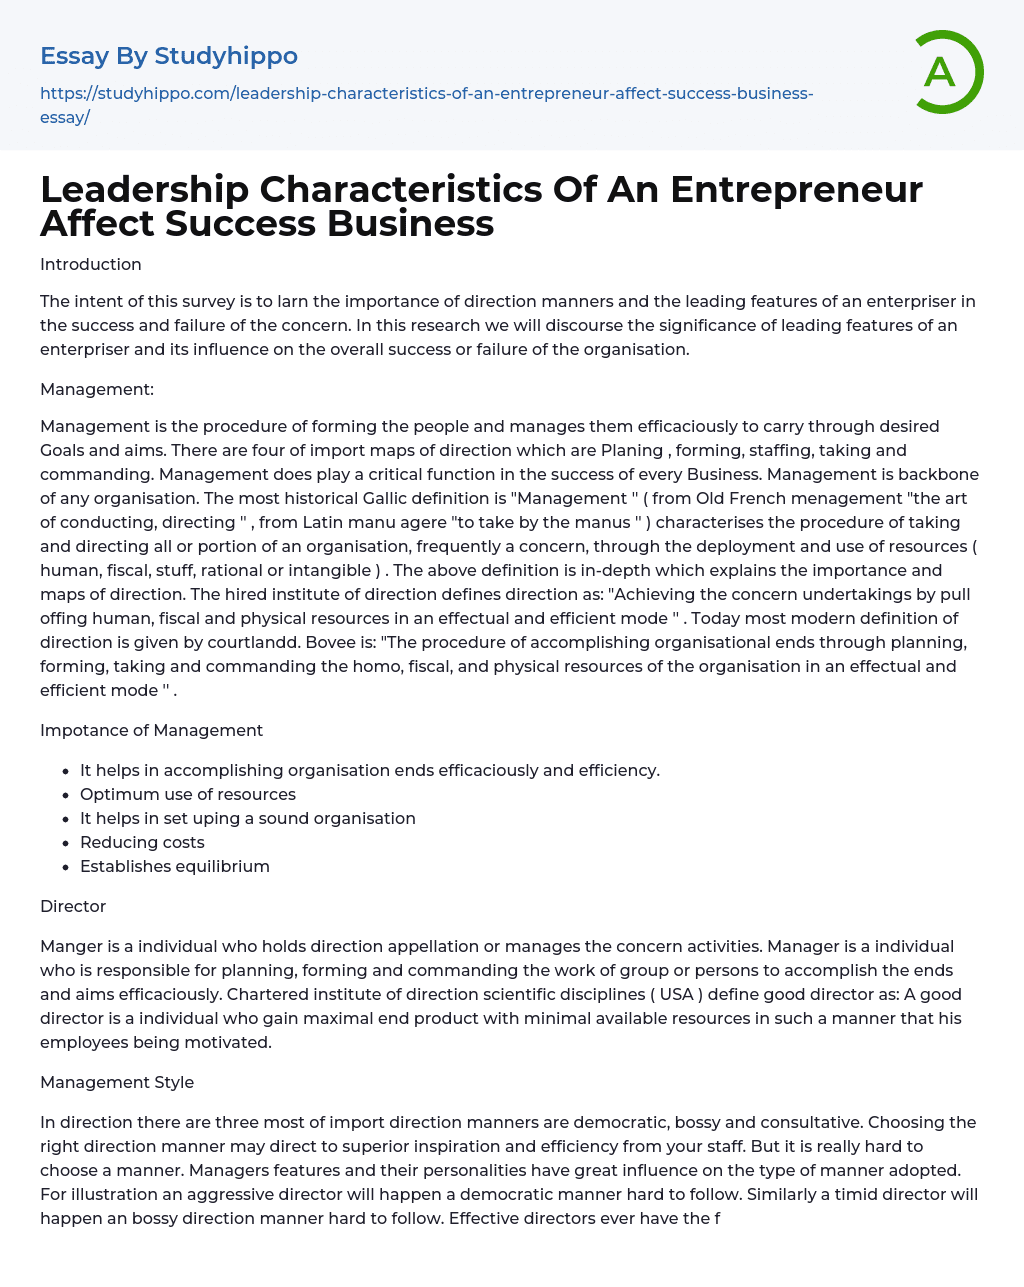 Leadership Characteristics Of An Entrepreneur Affect Success Business Essay Example